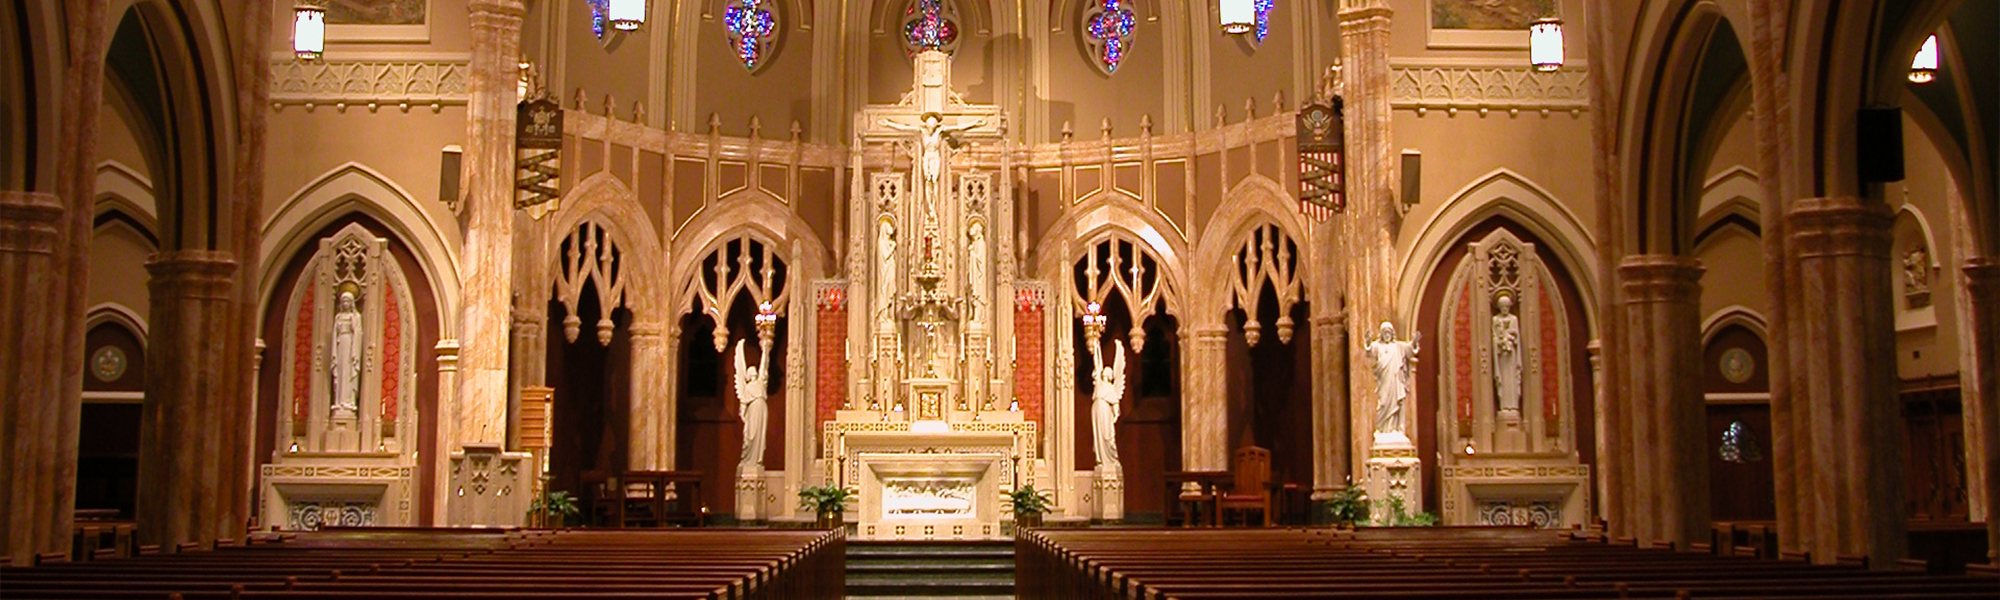 blessed sacrament church interior